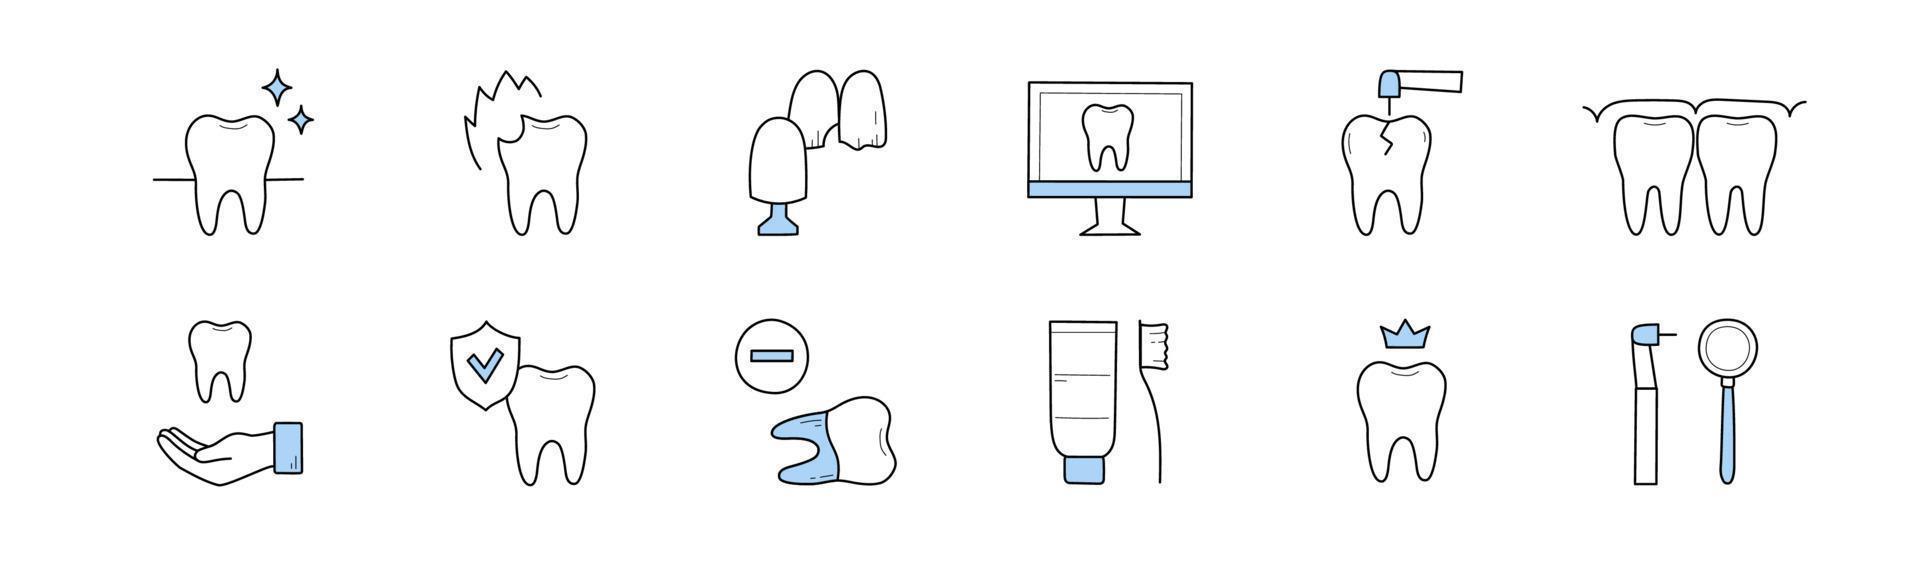 tandheelkunde en stomatologie tekening pictogrammen, tekens reeks vector